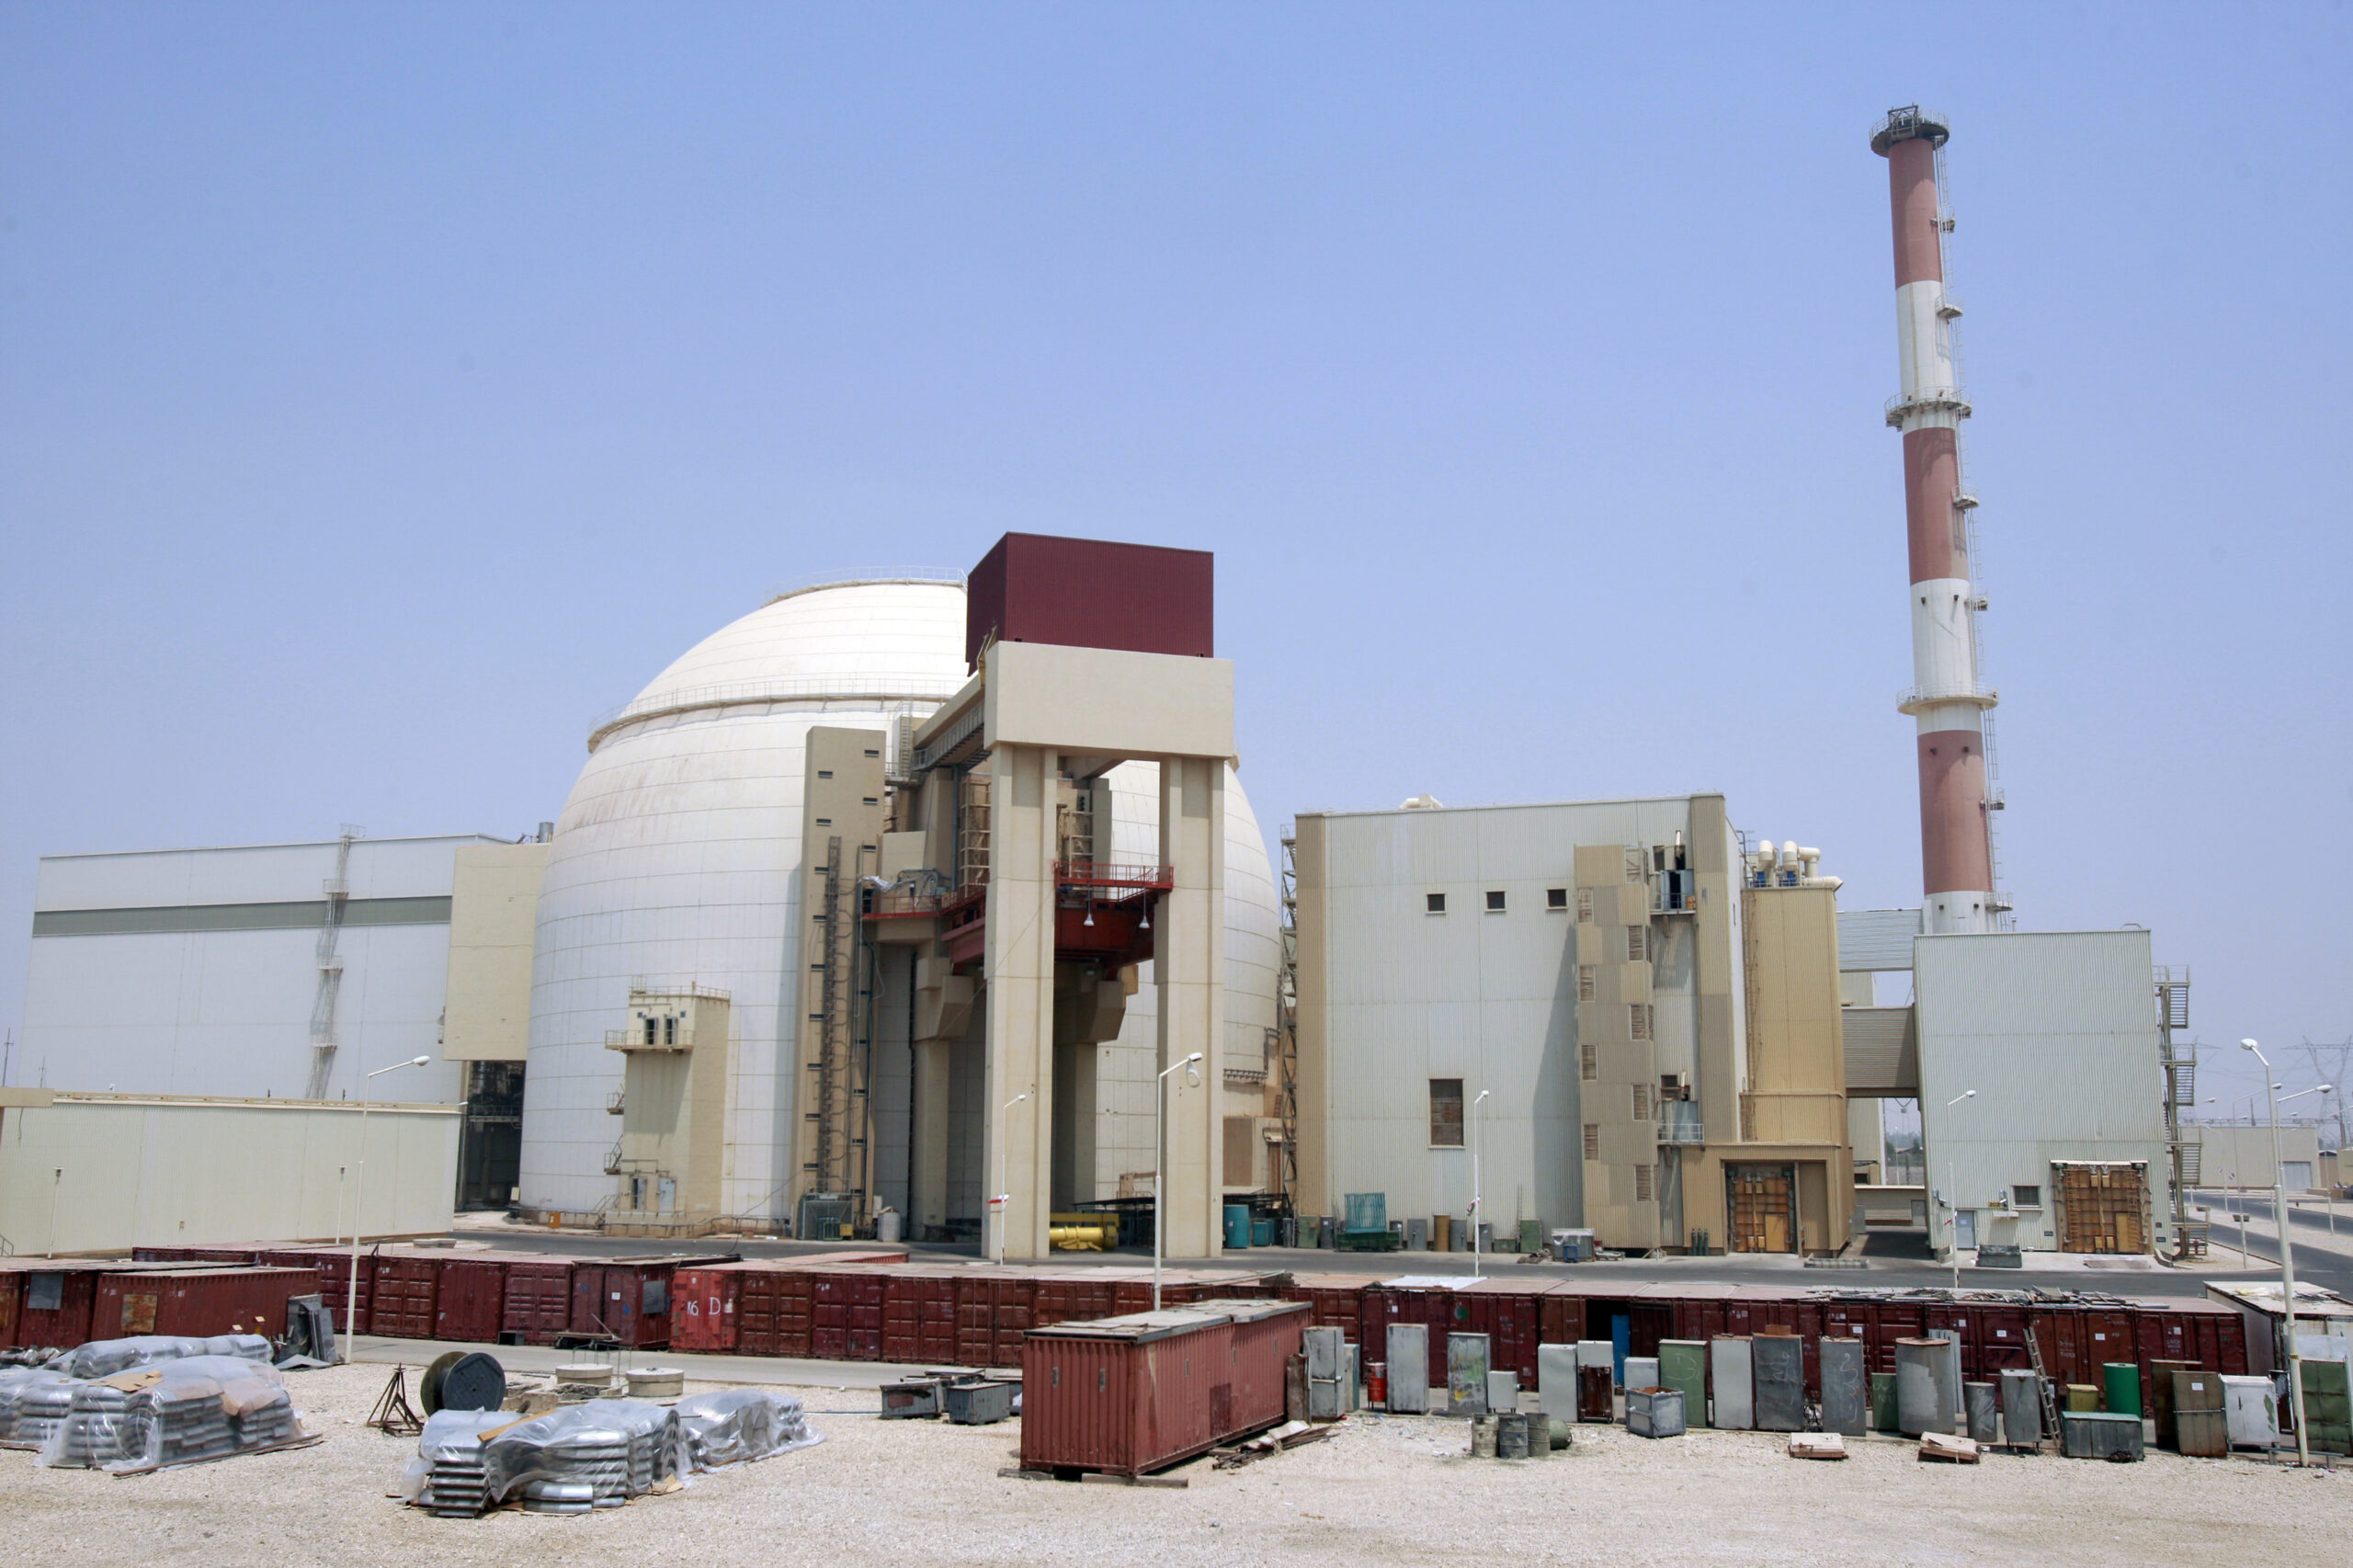 Eκτός λειτουργίας λόγω "τεχνικής βλάβης" o πυρηνικός σταθμός Μπουσέρ στο Ιράν